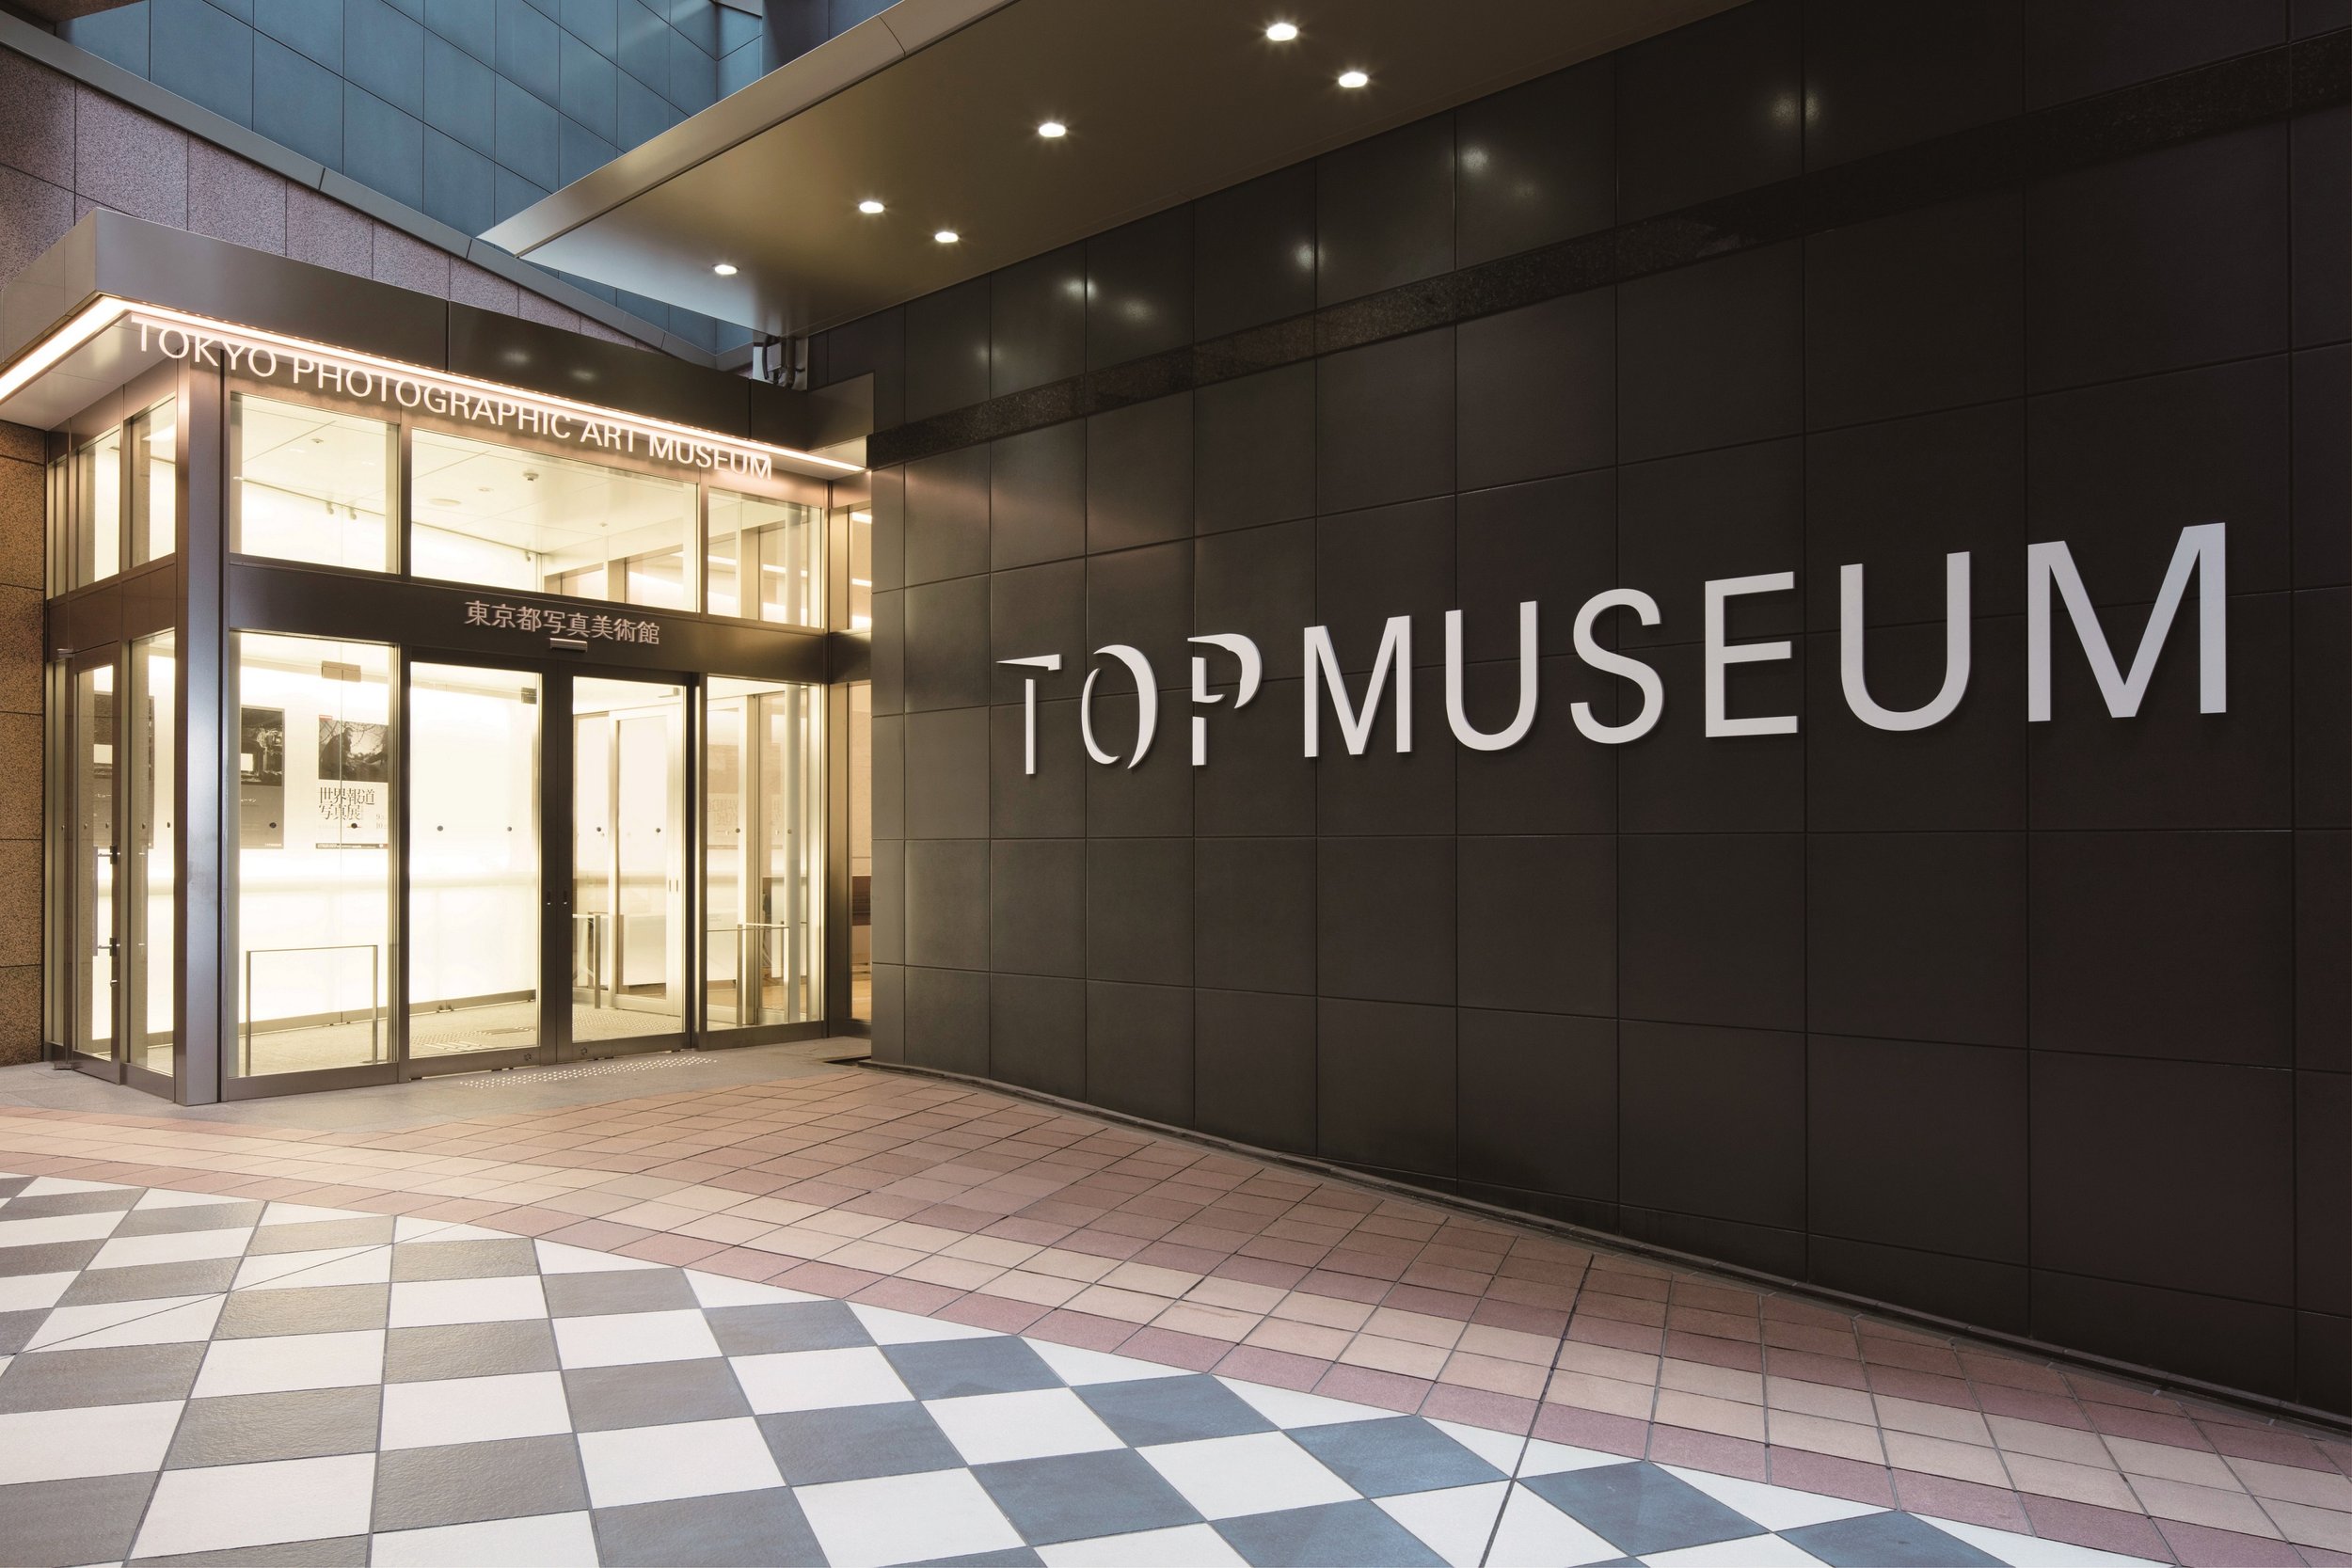  The Tokyo Photographic Art Museum 